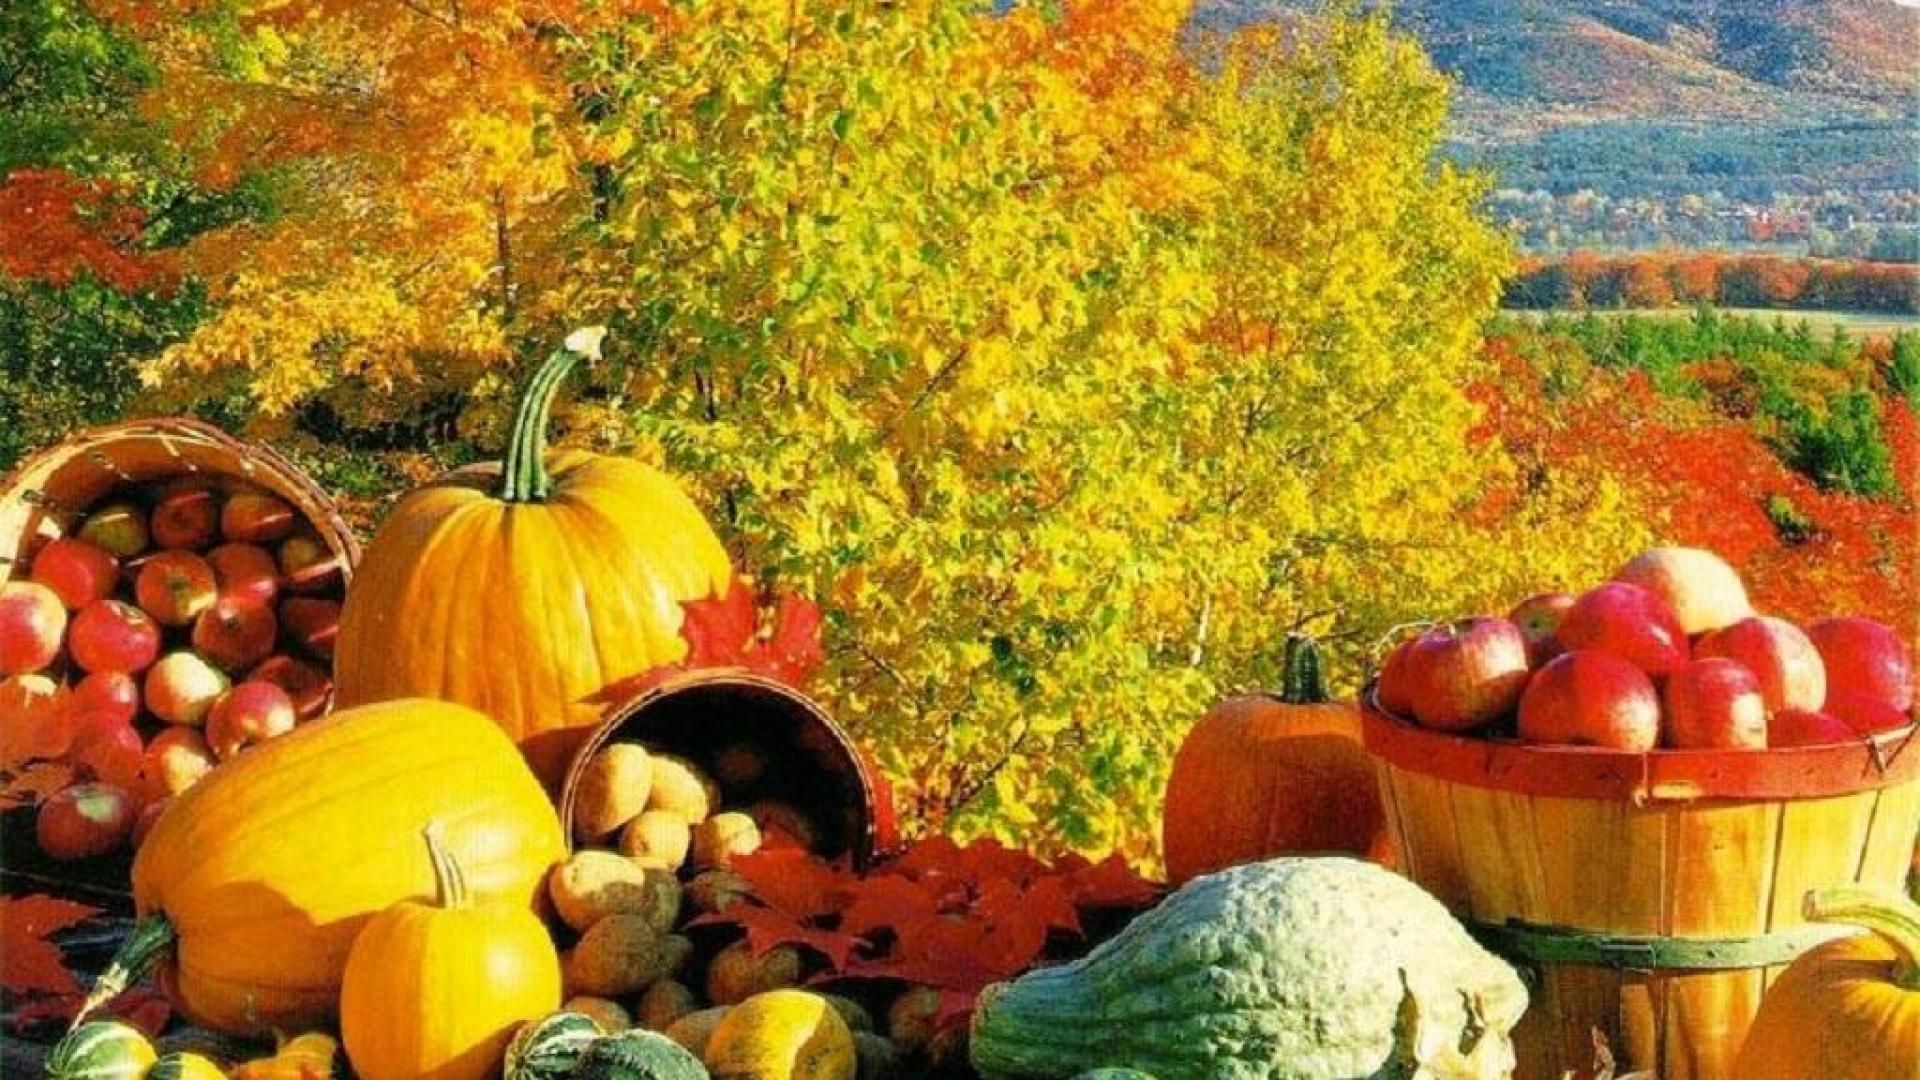 Fall Harvest Wallpaper Images Harvest Fall Autumn Pumpkins Wallpaper ...